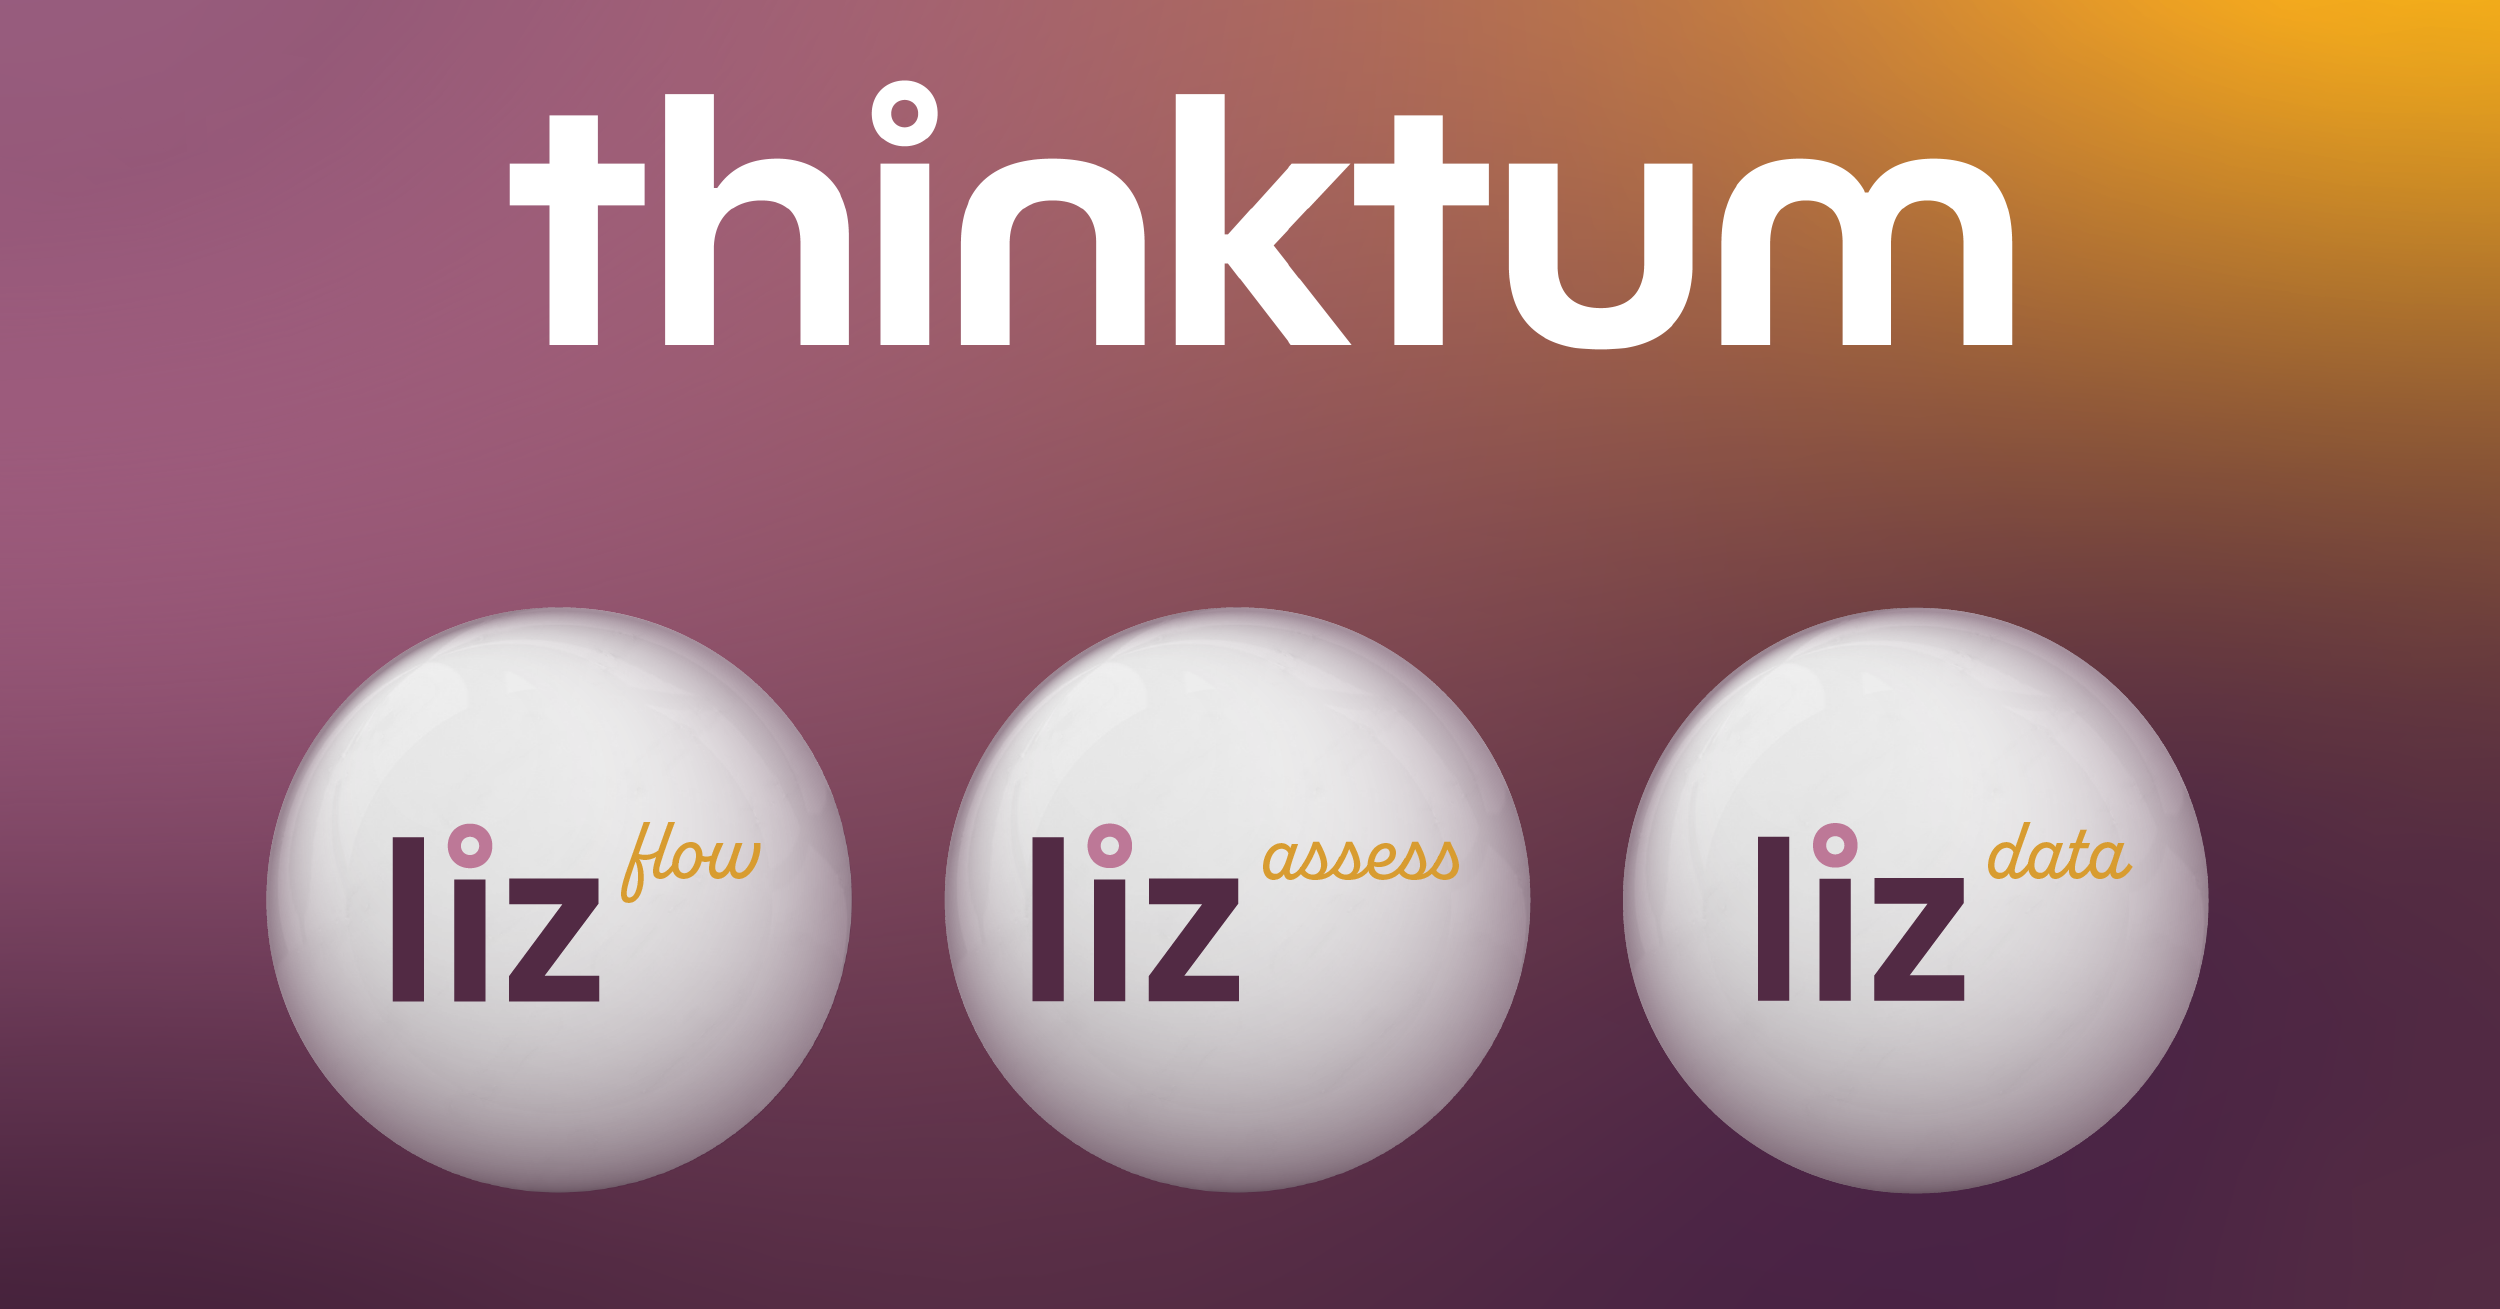 The thinktum wordmark is shown above the three liz balls, from the left flow, liz assess, then liz data.